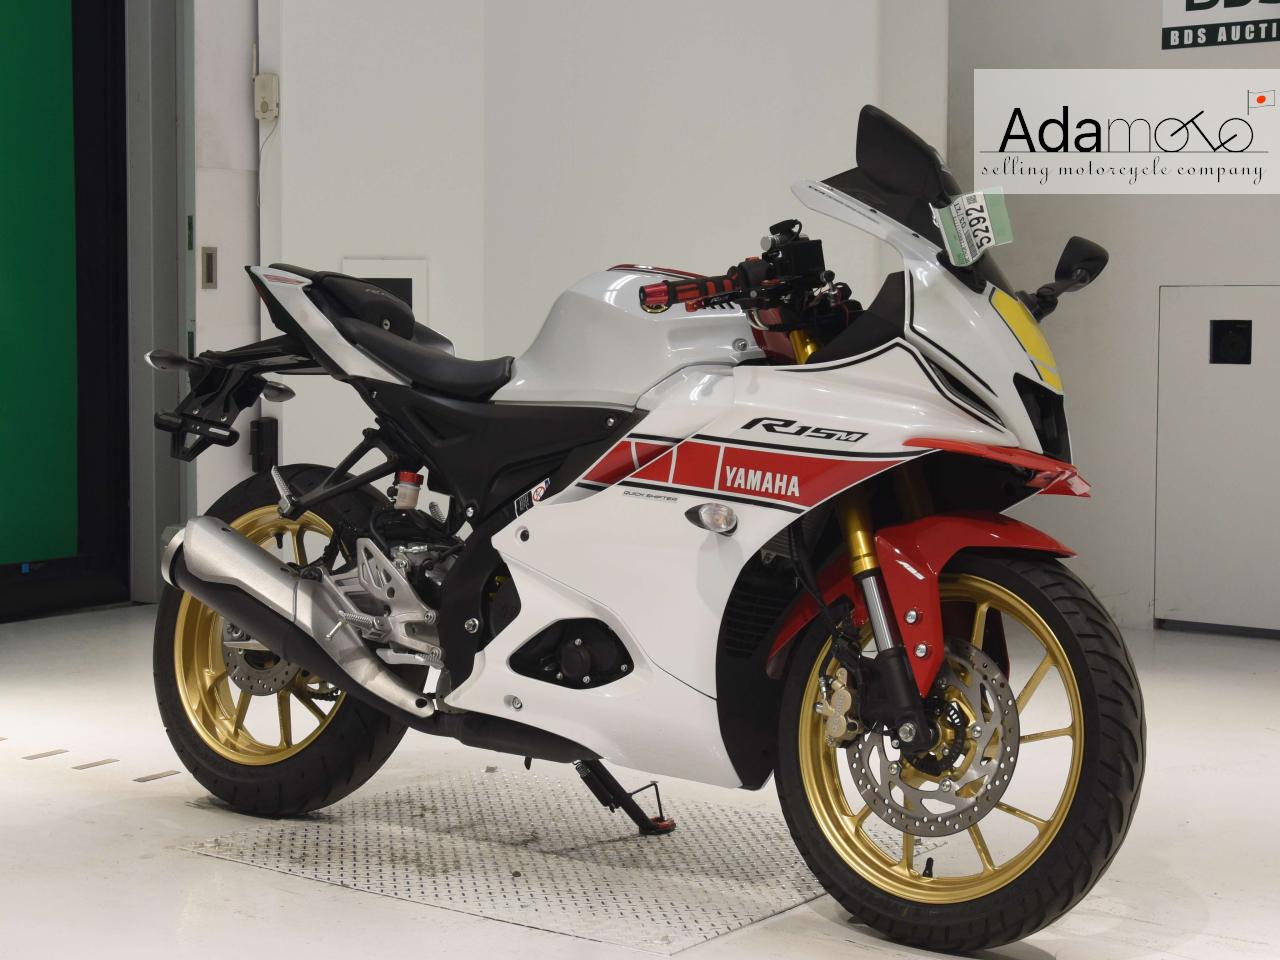 Yamaha YZF-R15M - Adamoto - Motorcycles from Japan